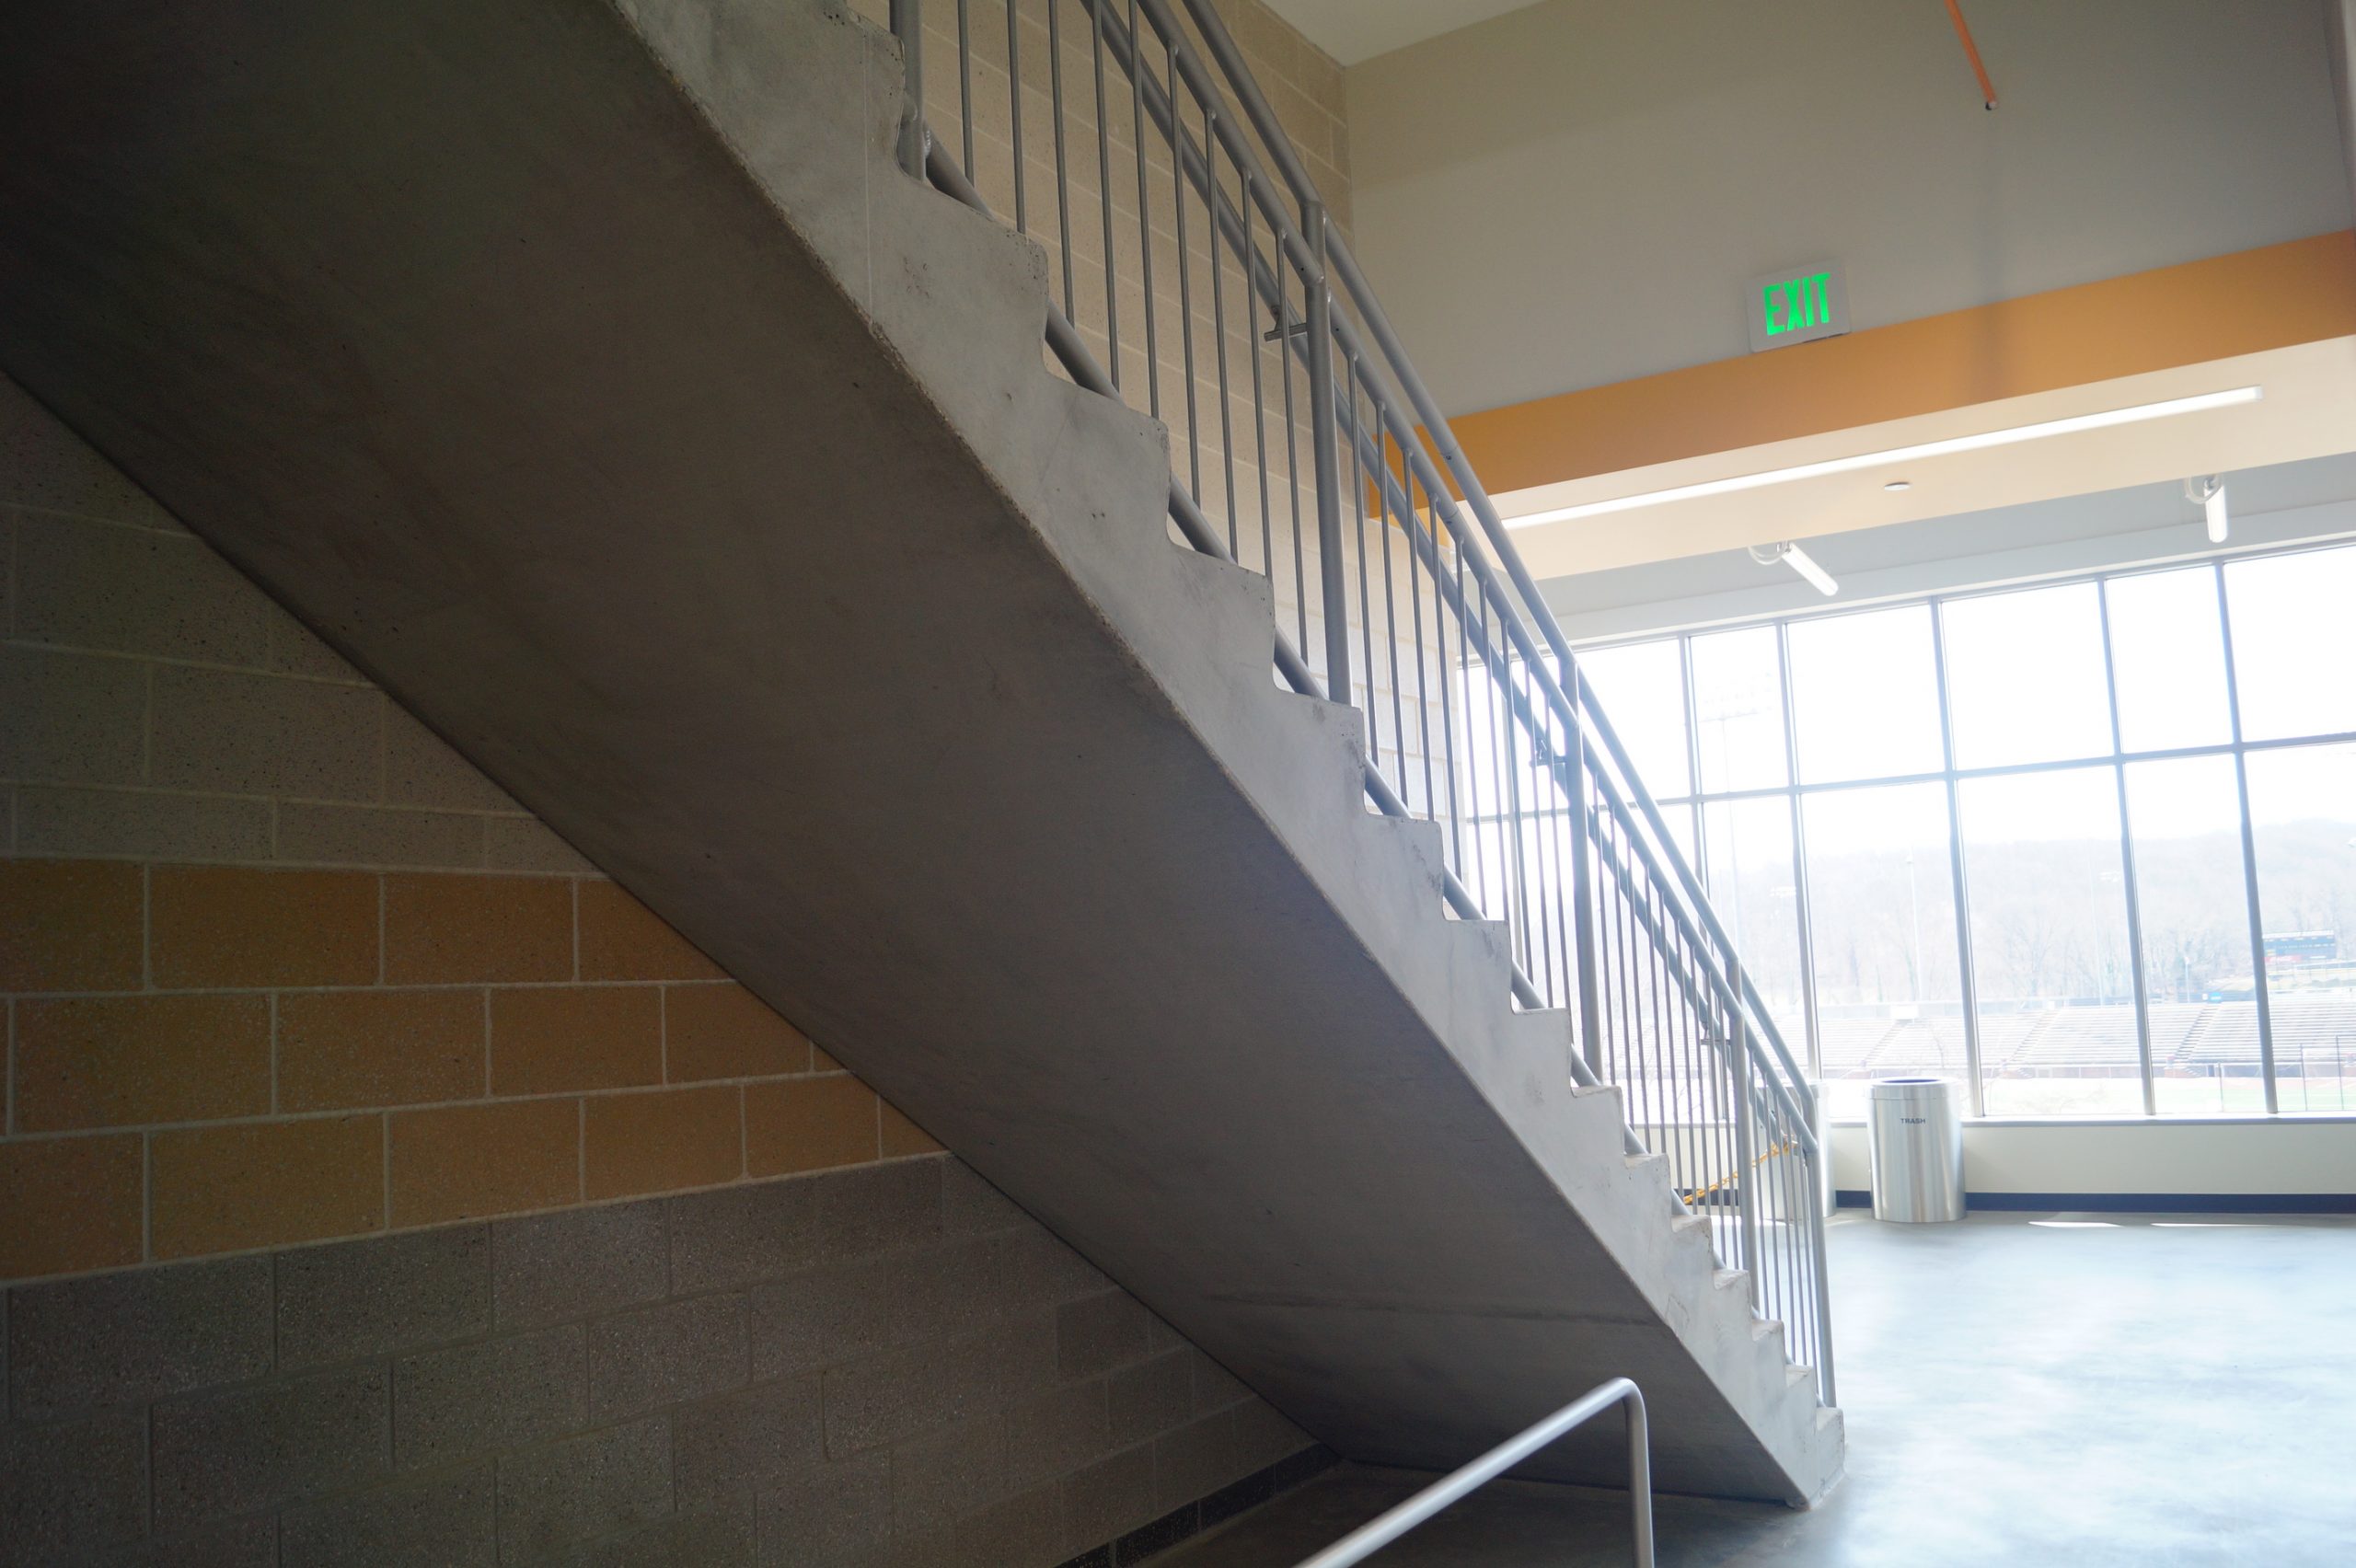 Concrete stairs at UMBC's Basketball Stadium